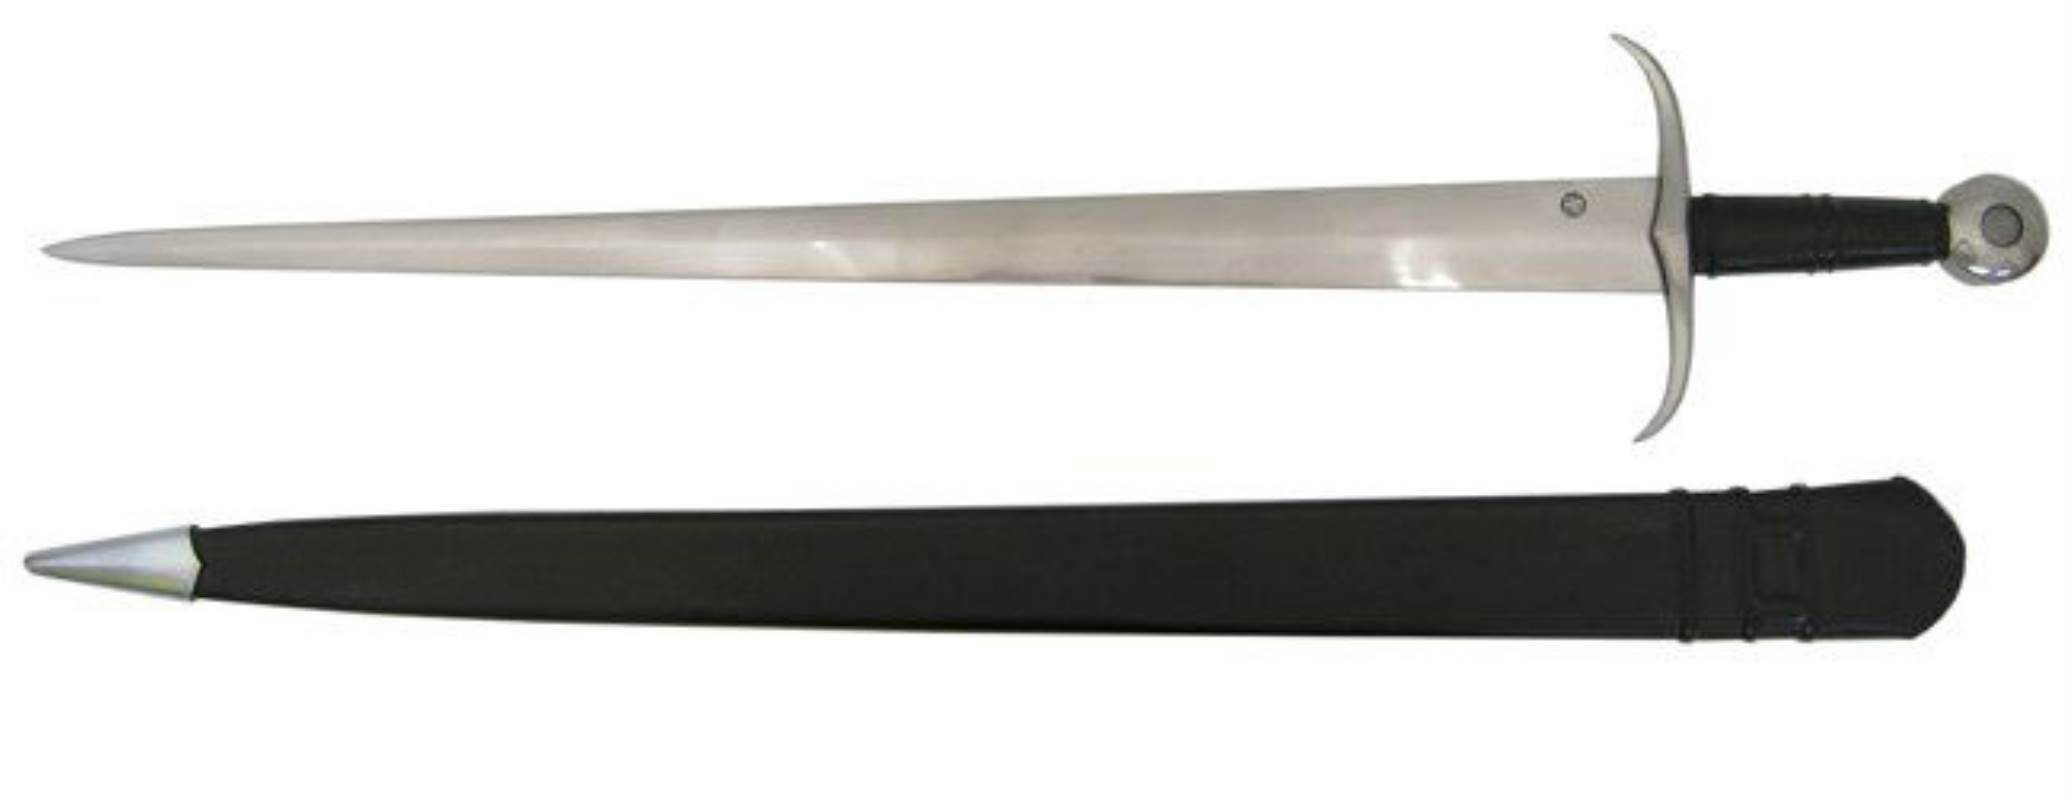 Archer's Sword